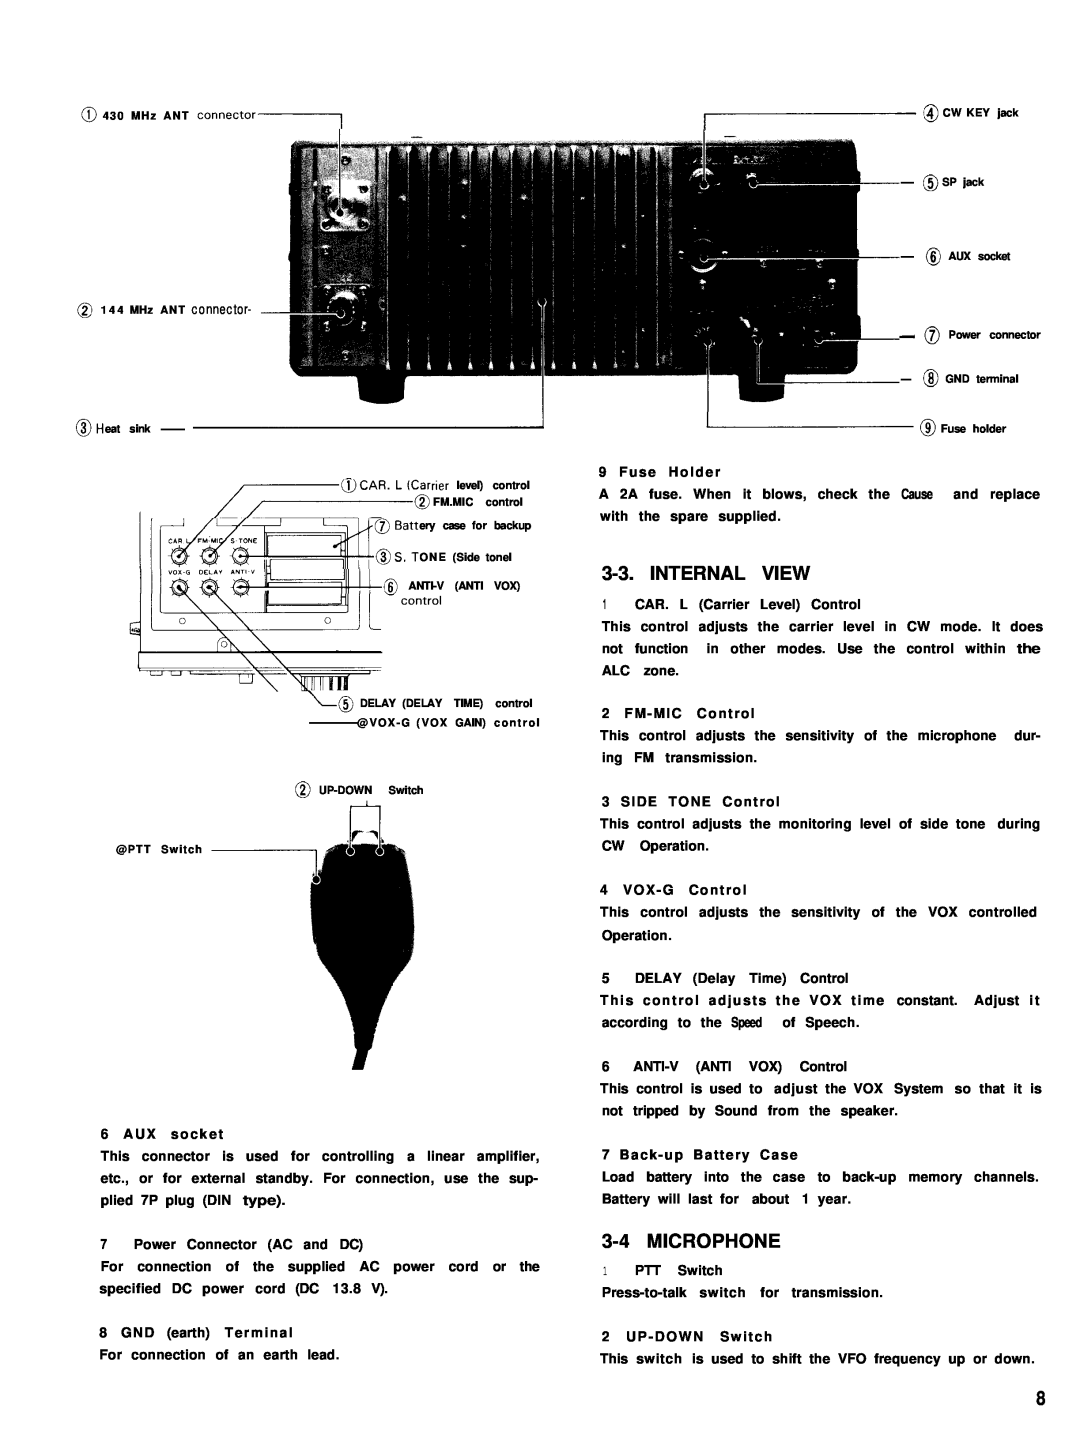 Kenwood TS-780 manual Internal View, 3-4MICROPHONE 